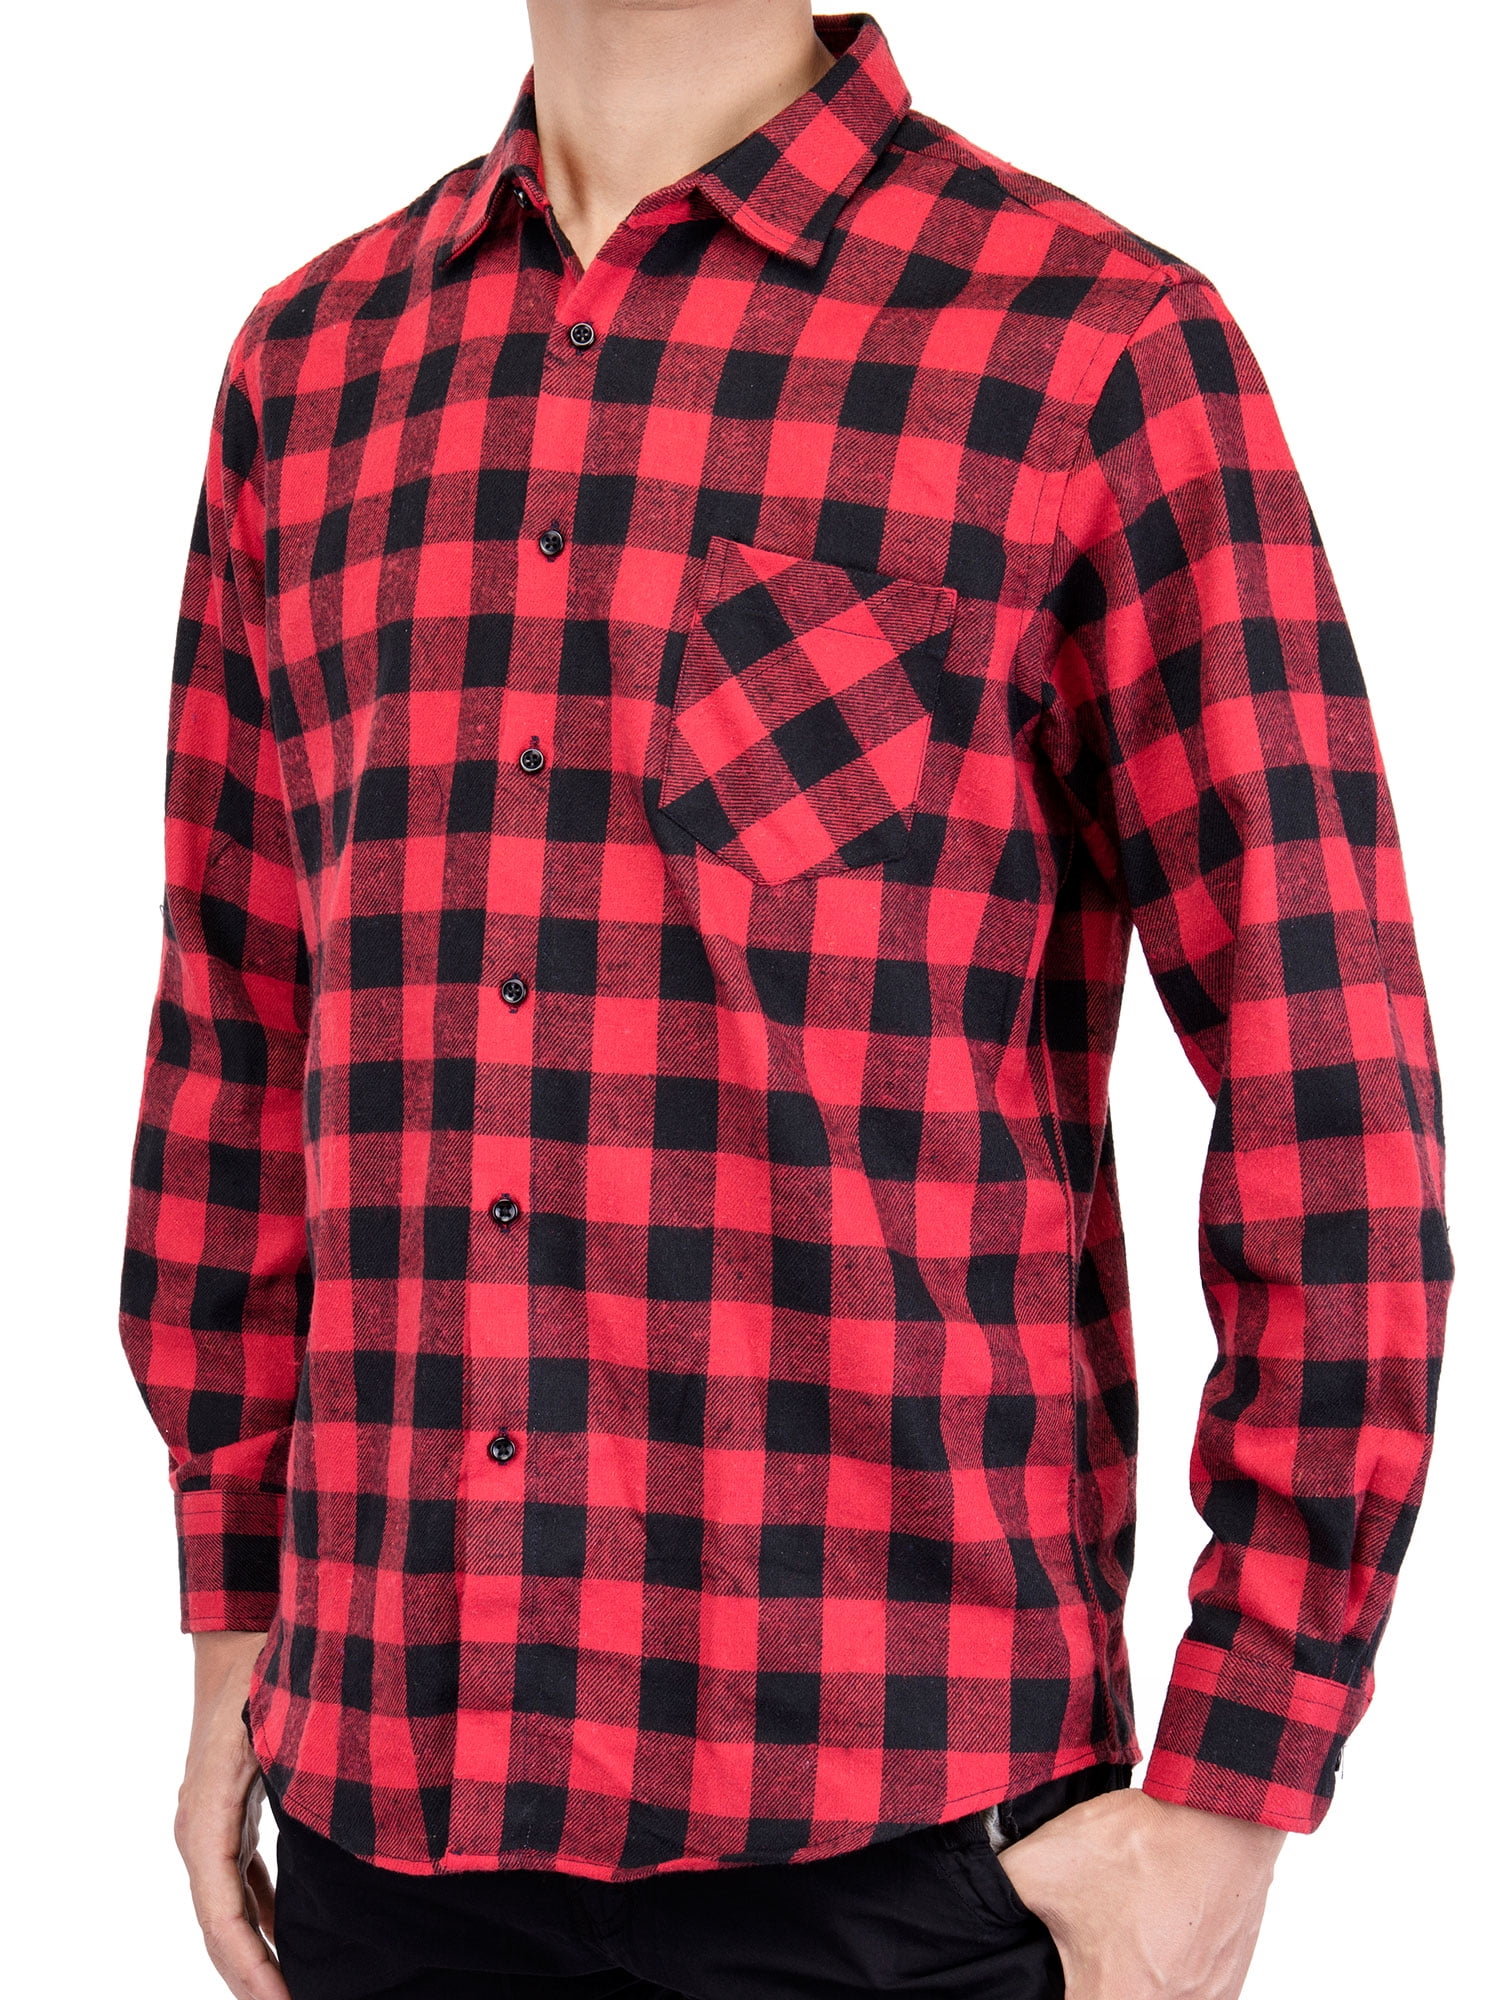 SELX Men Long Sleeve Flannel Cotton Flannel Plaid Casual Shirt Blouse Top 